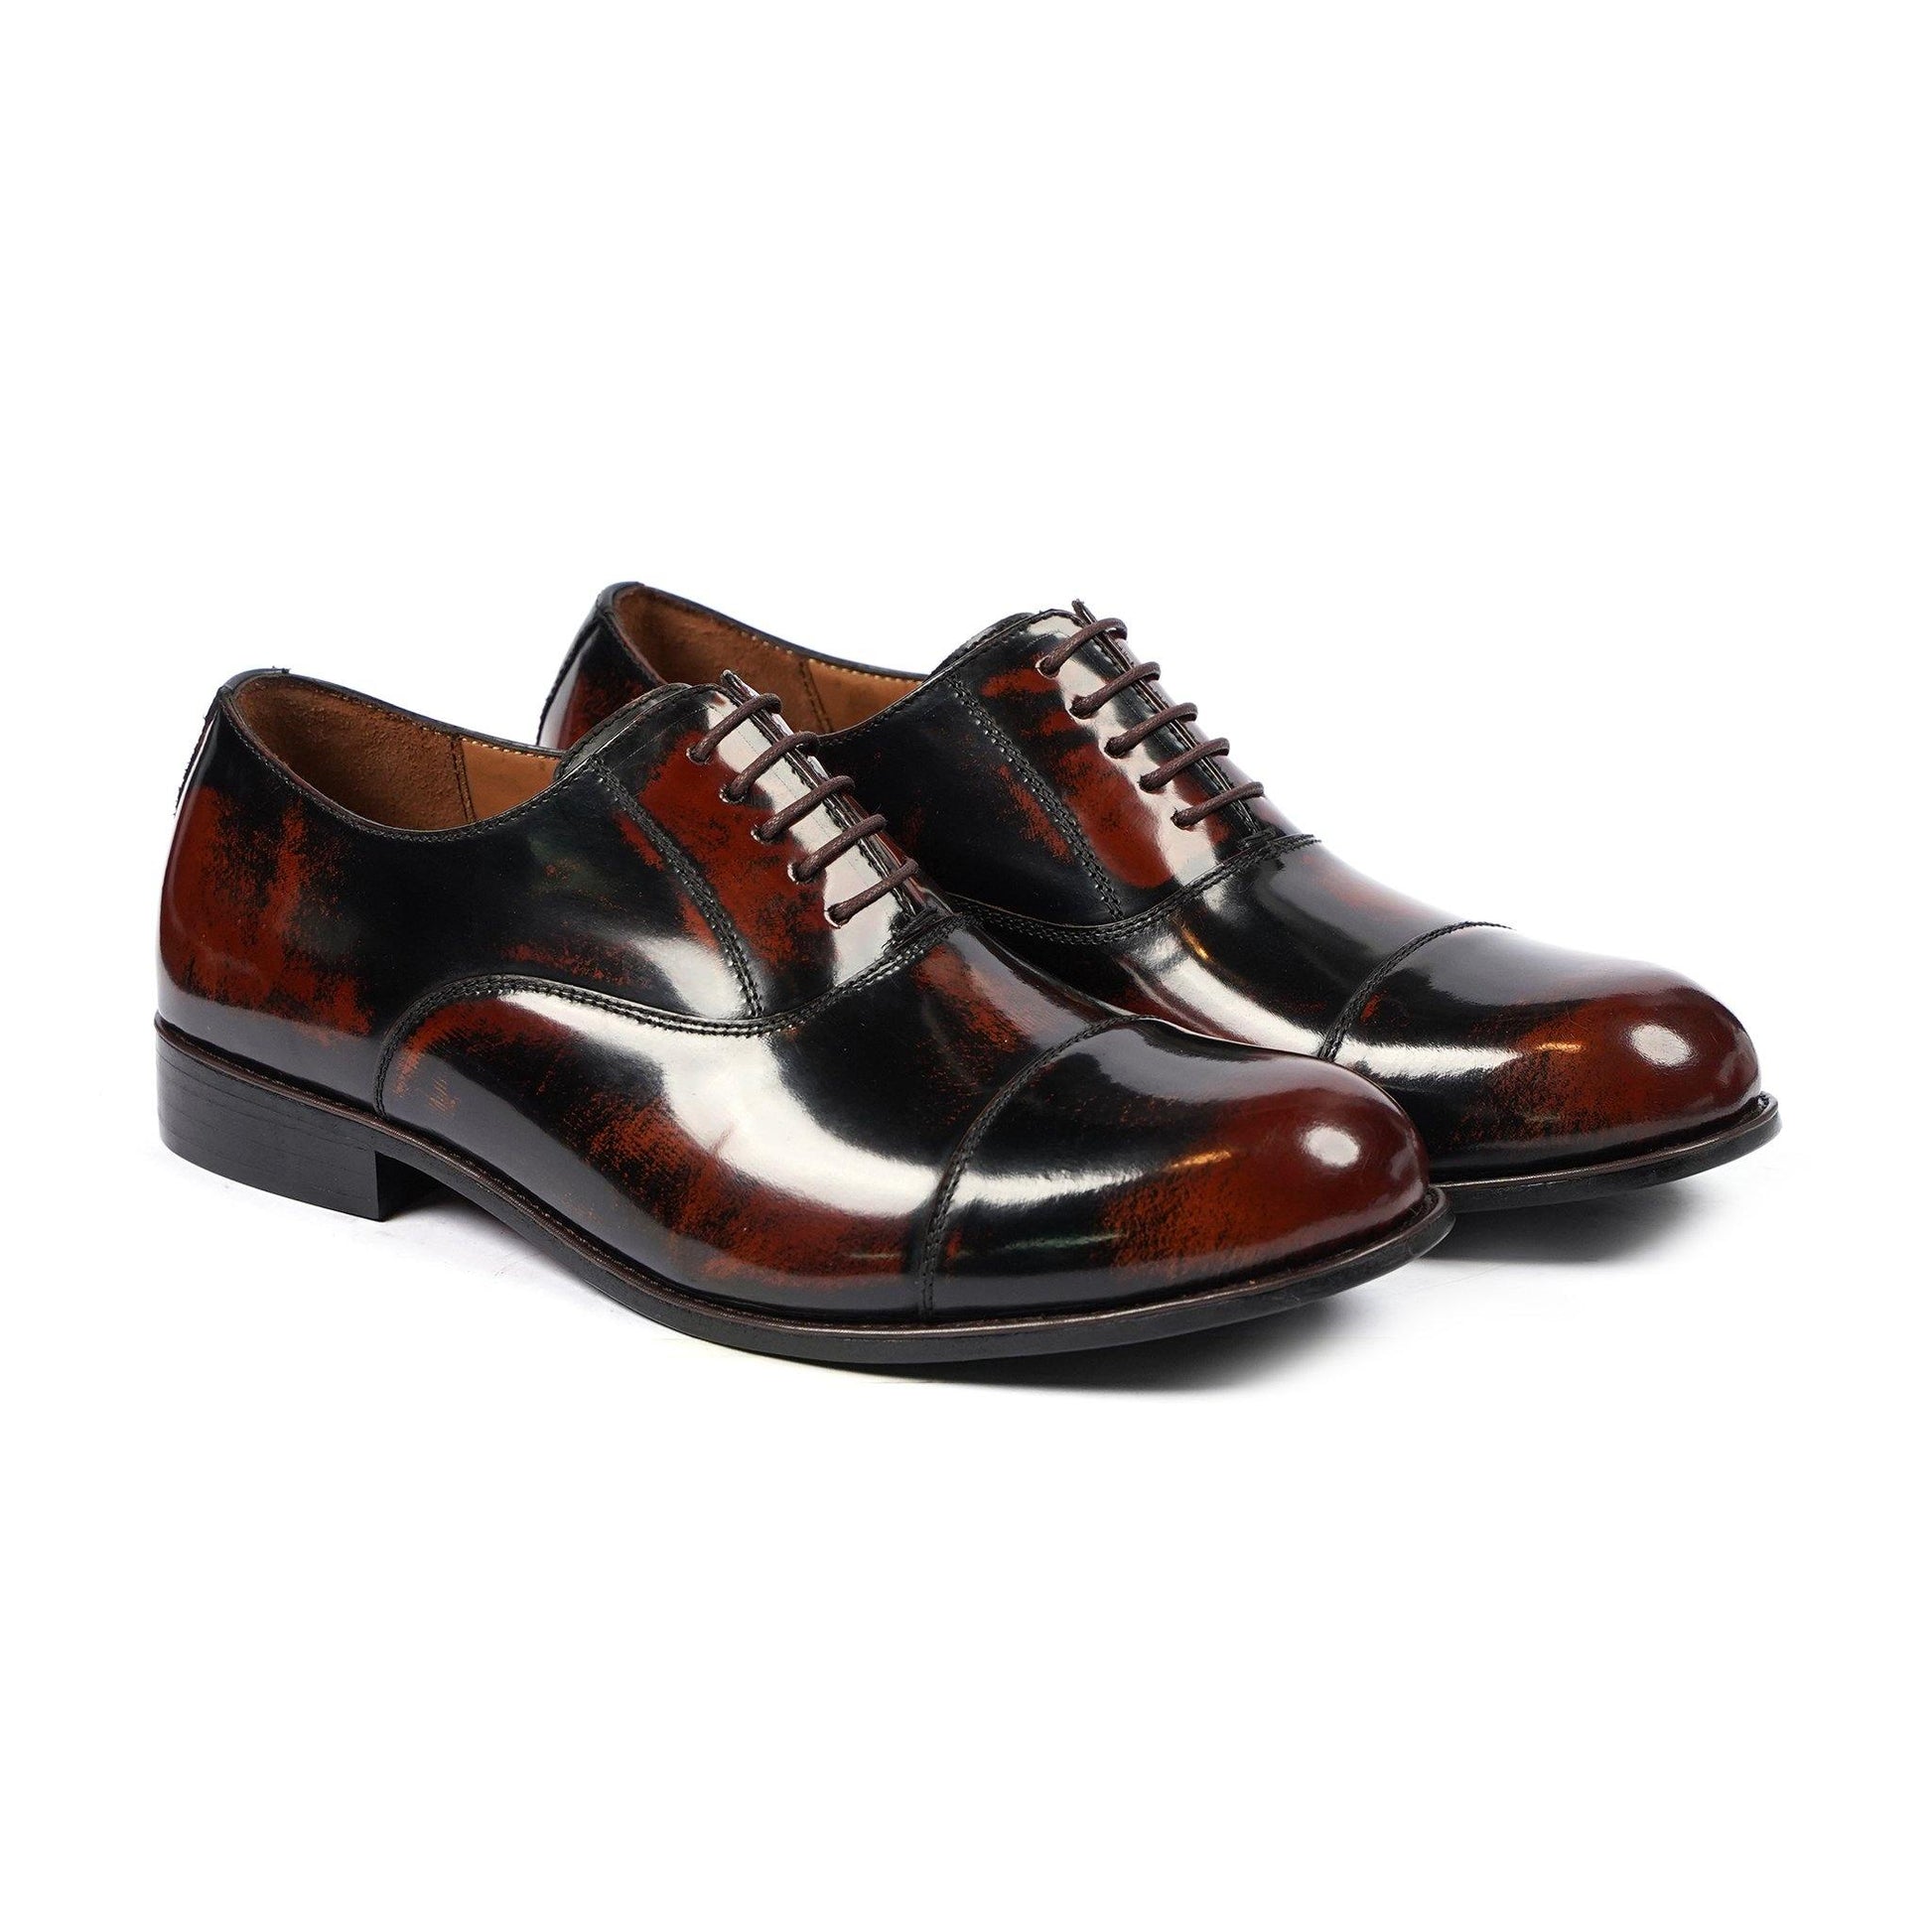 Toe Cap Oxford Designer Shoes For Men Leather Boots, Toe Cap Oxford Designer Shoes For Men